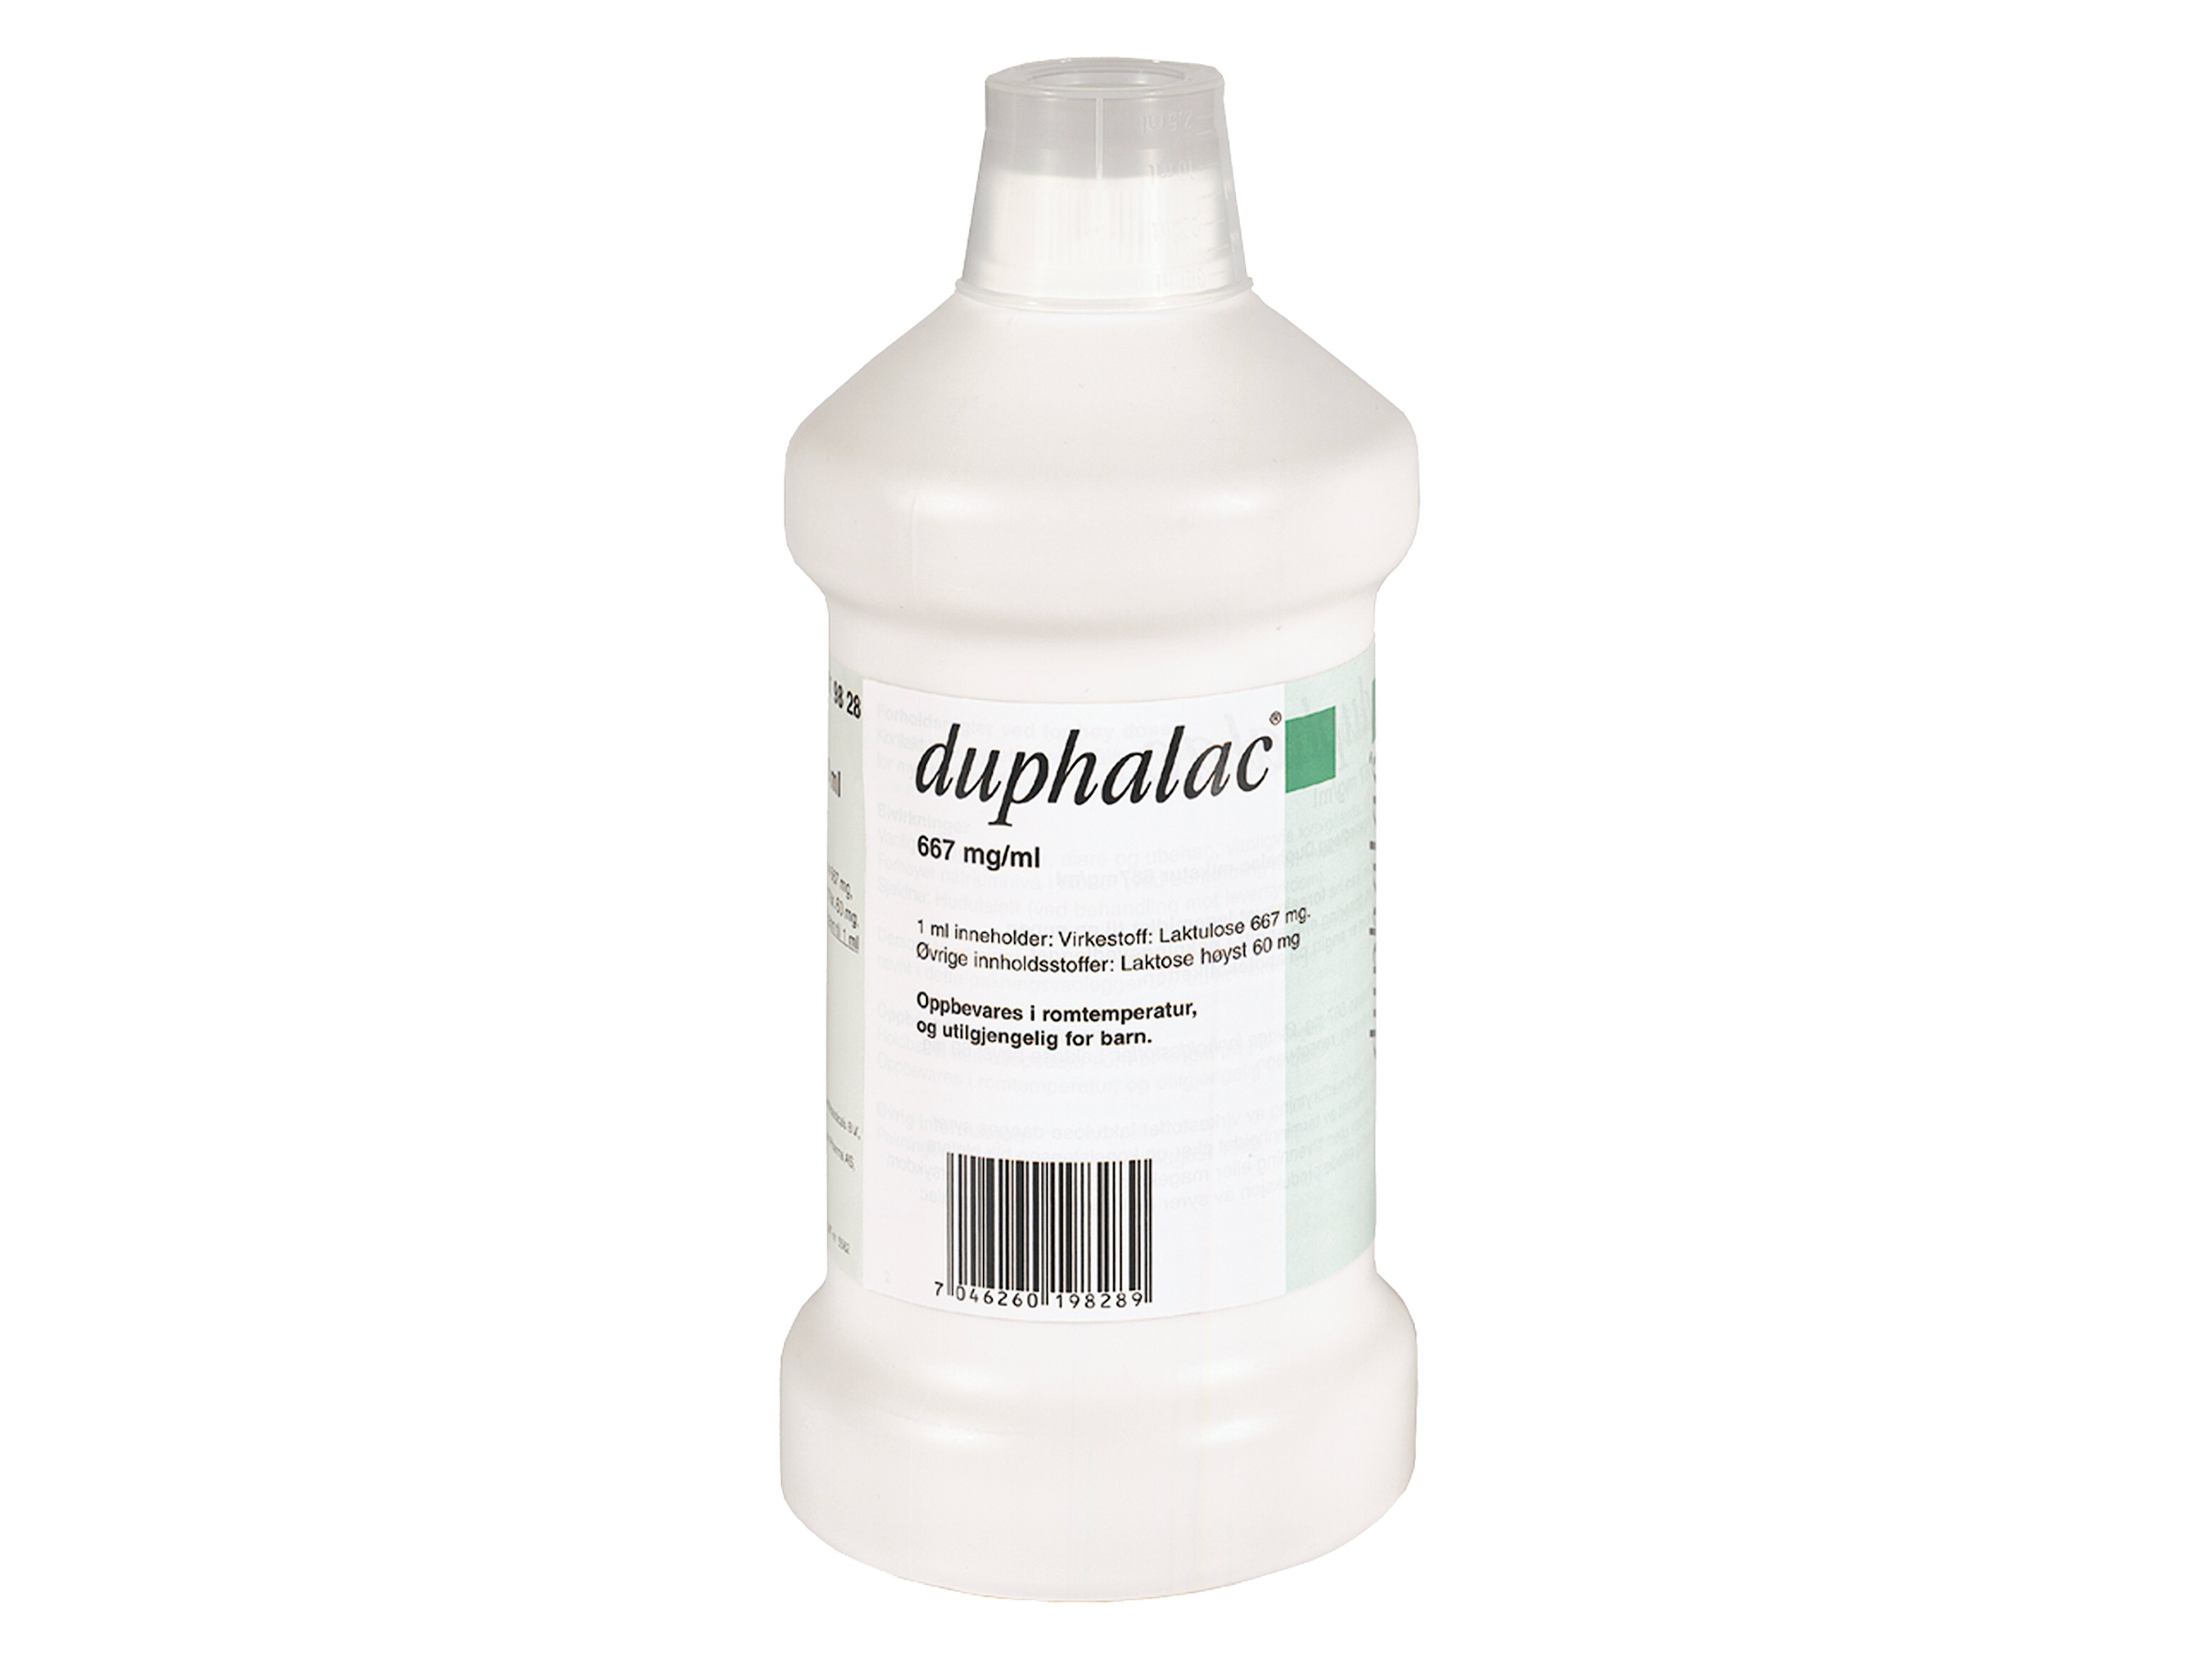 Duphalac Mikstur 667mg/ml, 1000 ml.